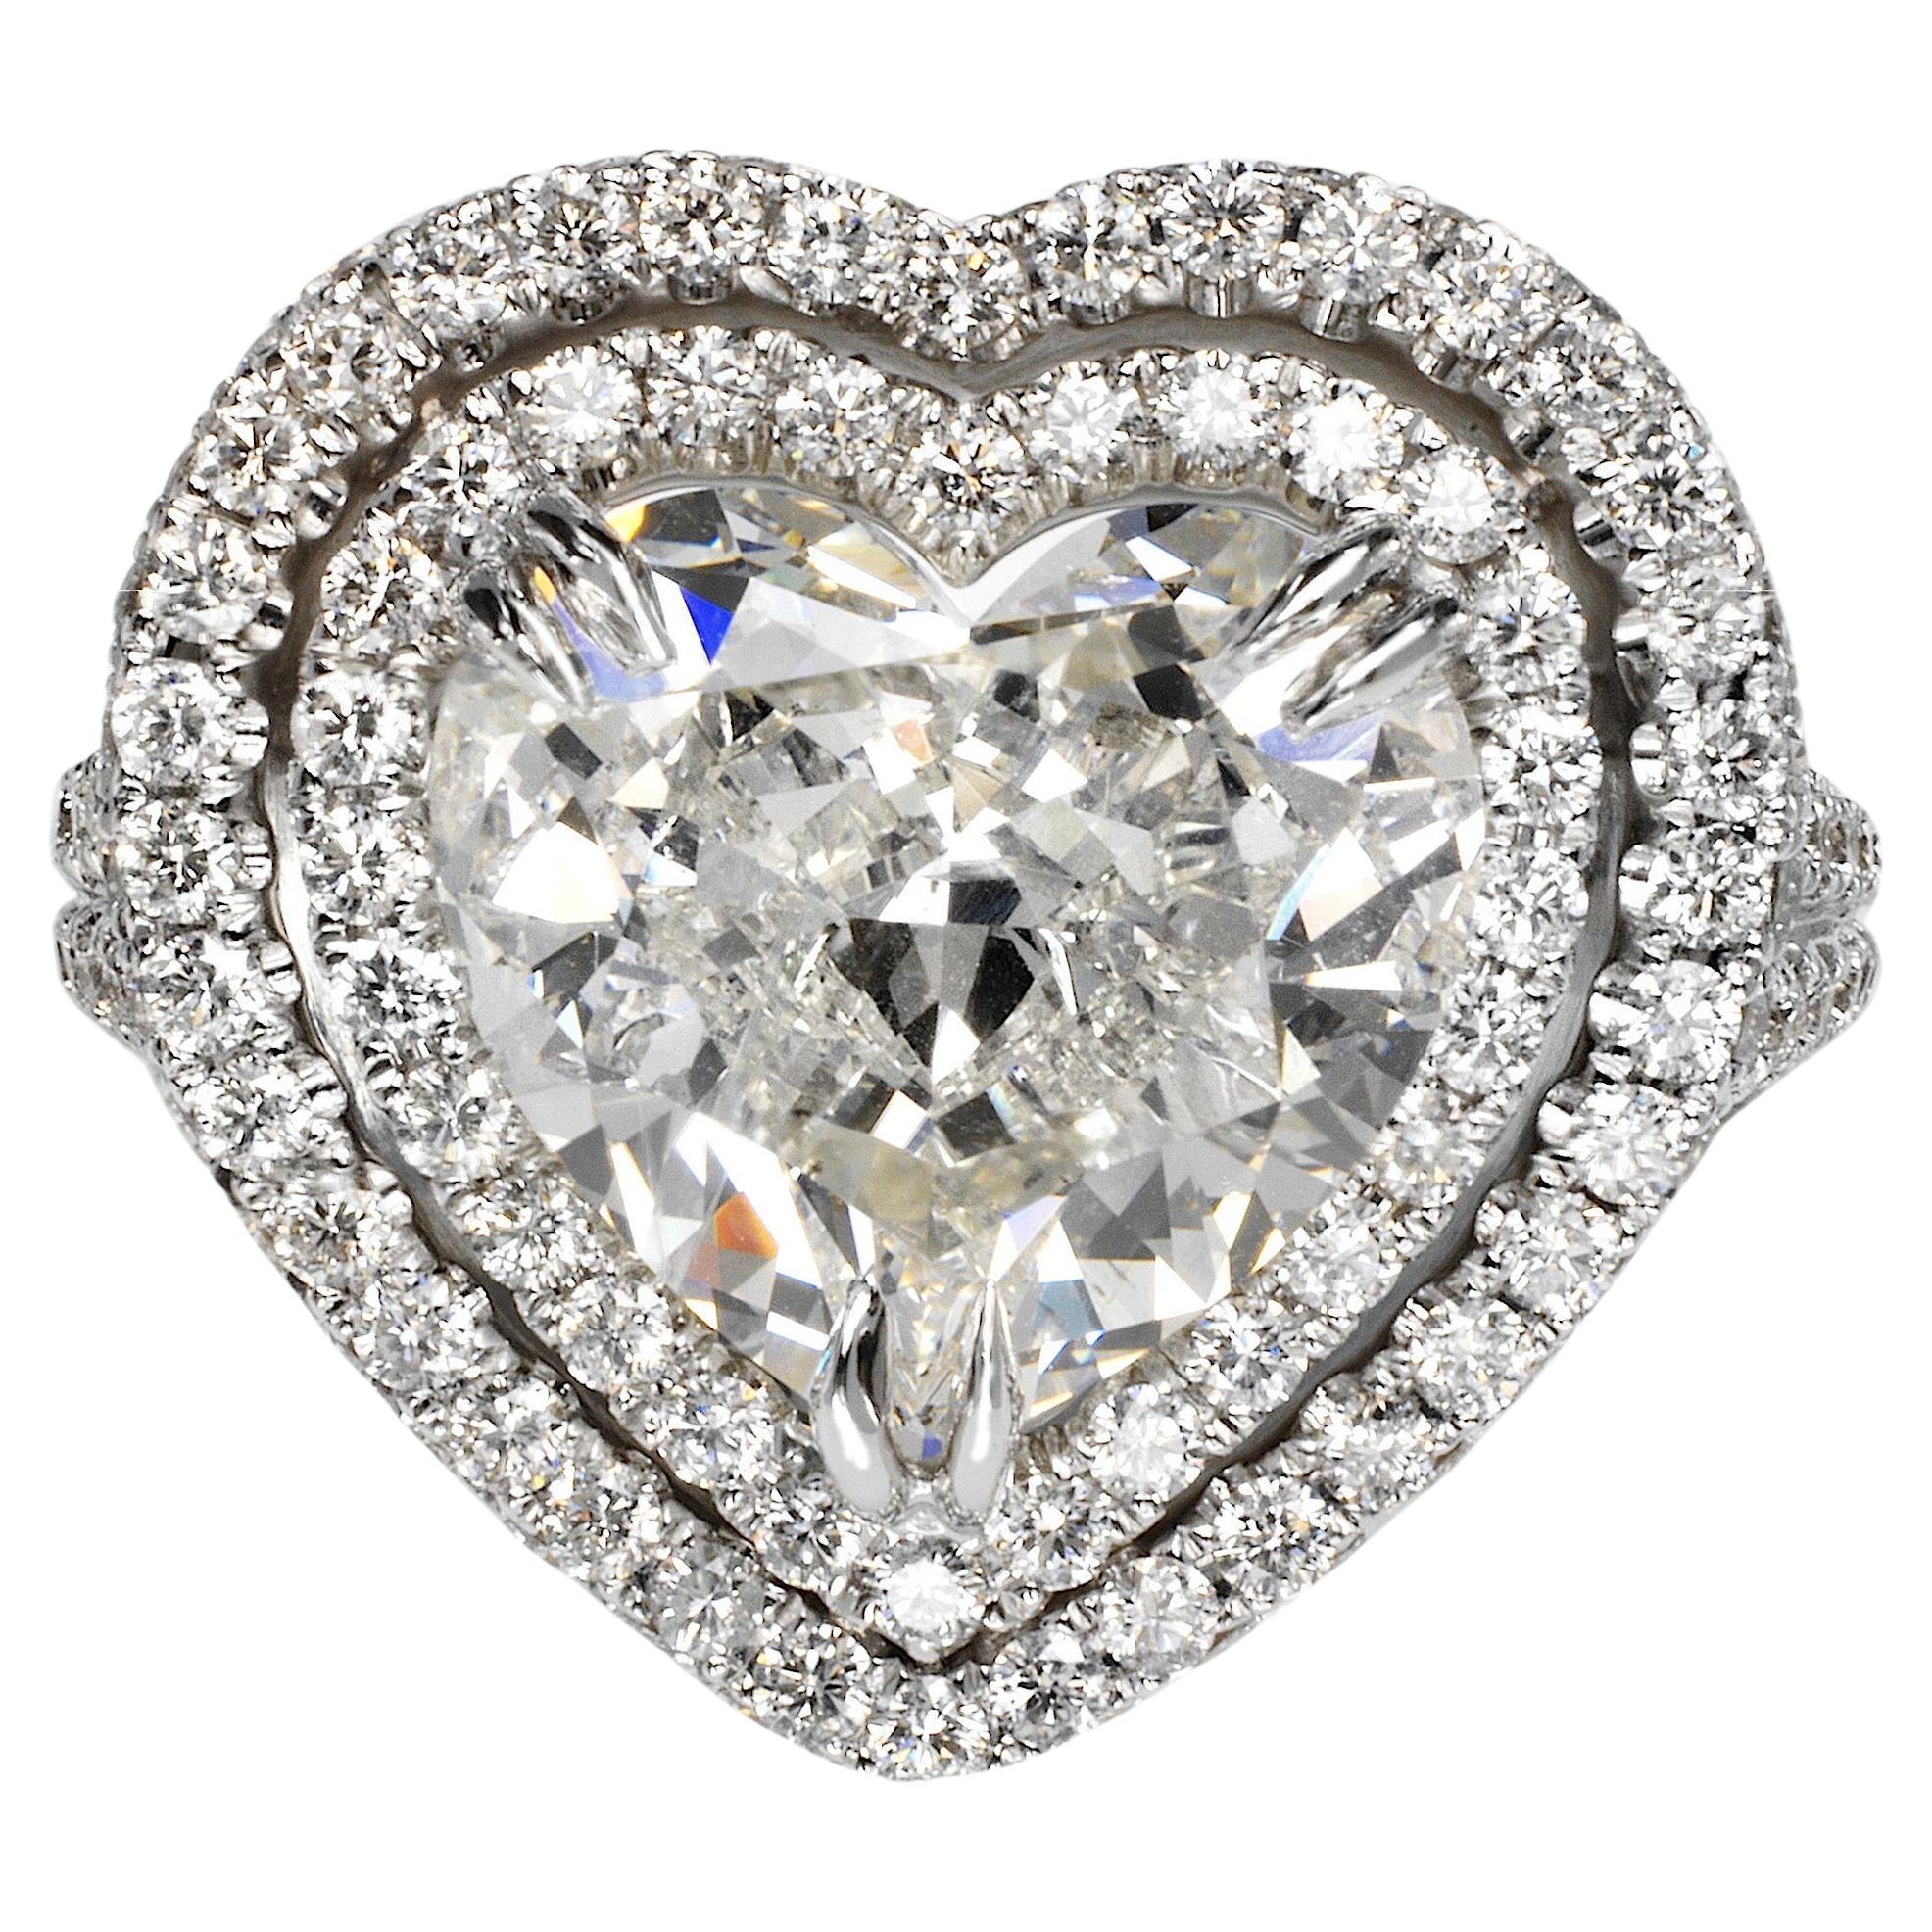 9 Carat Heart Shape Diamond Engagement Ring EGL Certified G VS2